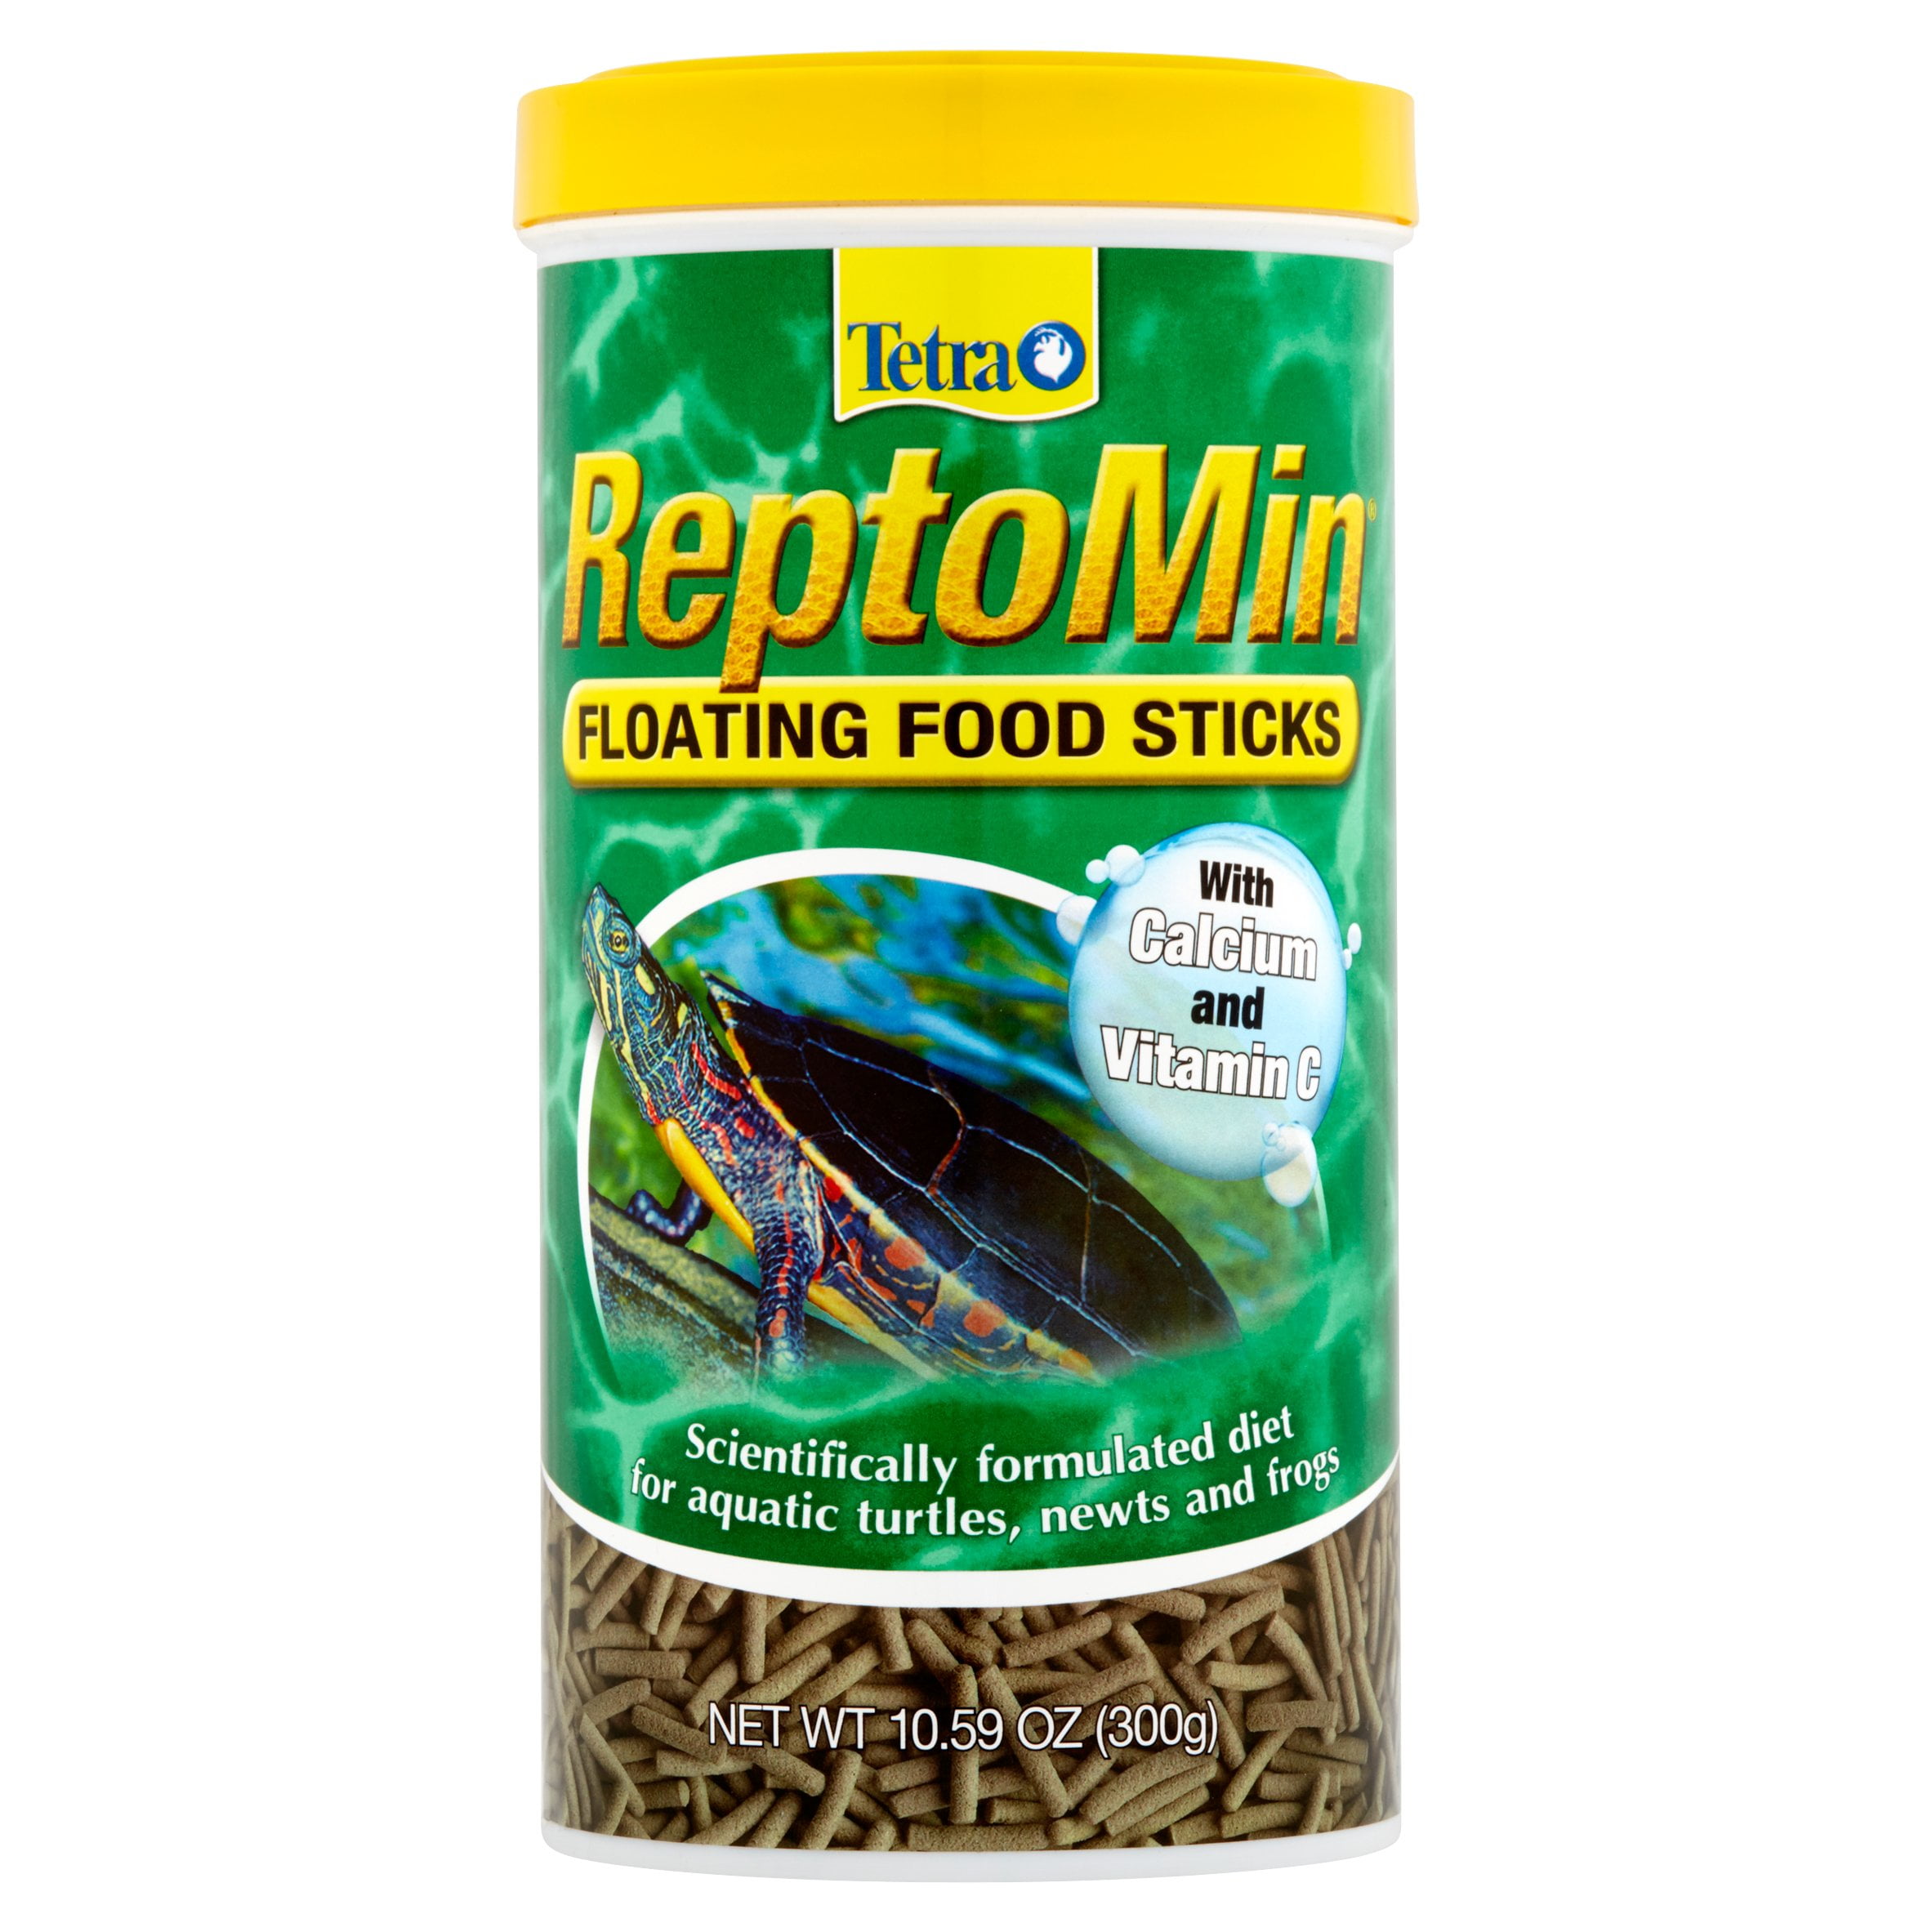 Tetra ReptoMin Floating Food Sticks (10.59 oz)